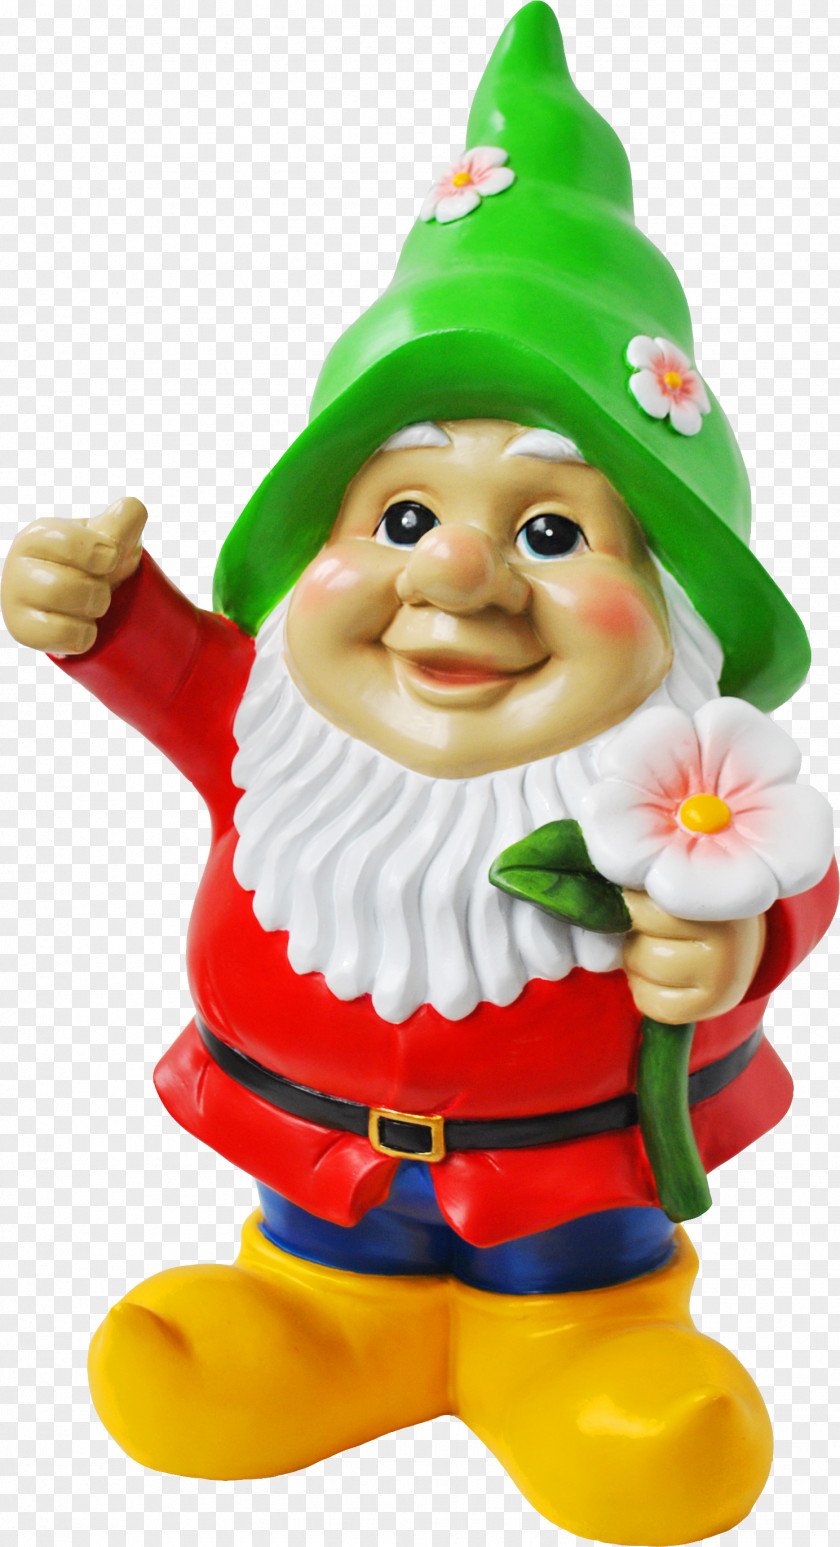 Entity Toy Dwarf Santa Claus Garden Gnome PNG